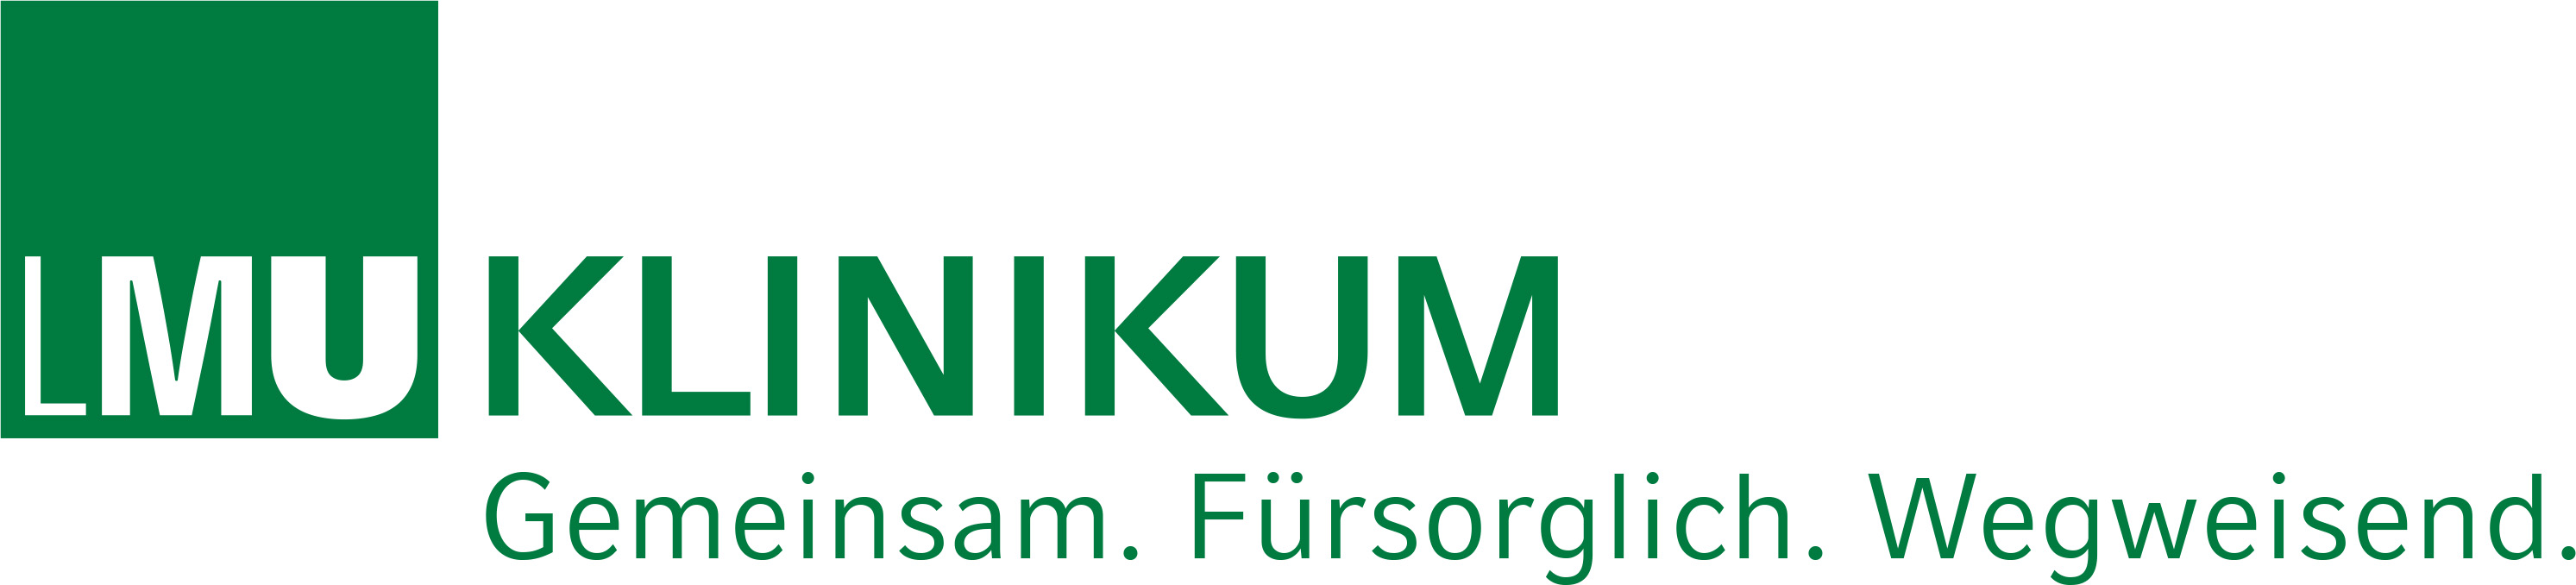 LMU Klinikum logo